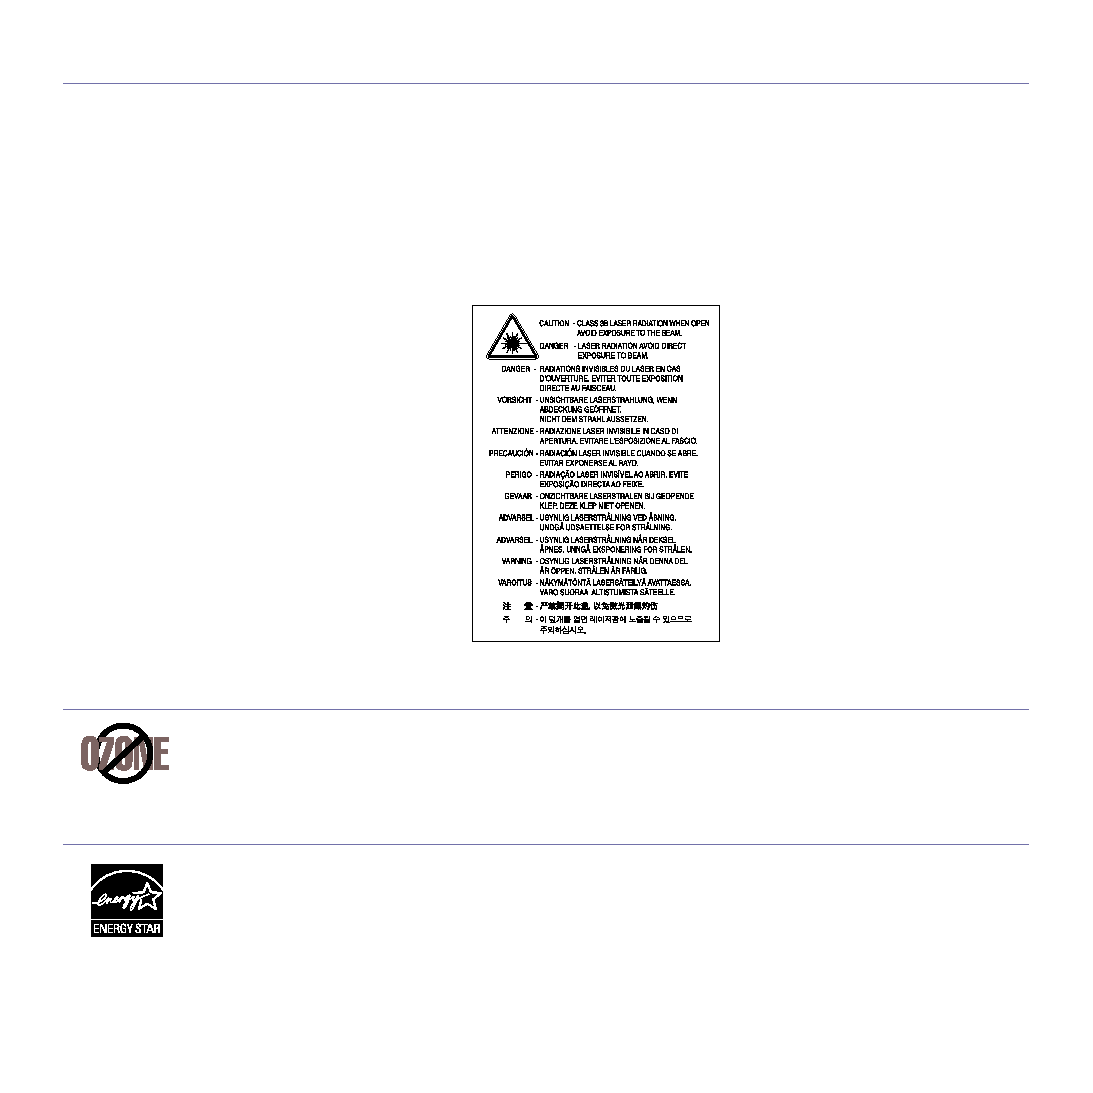 Samsung CLP-310 User Manual (ver.1.03)